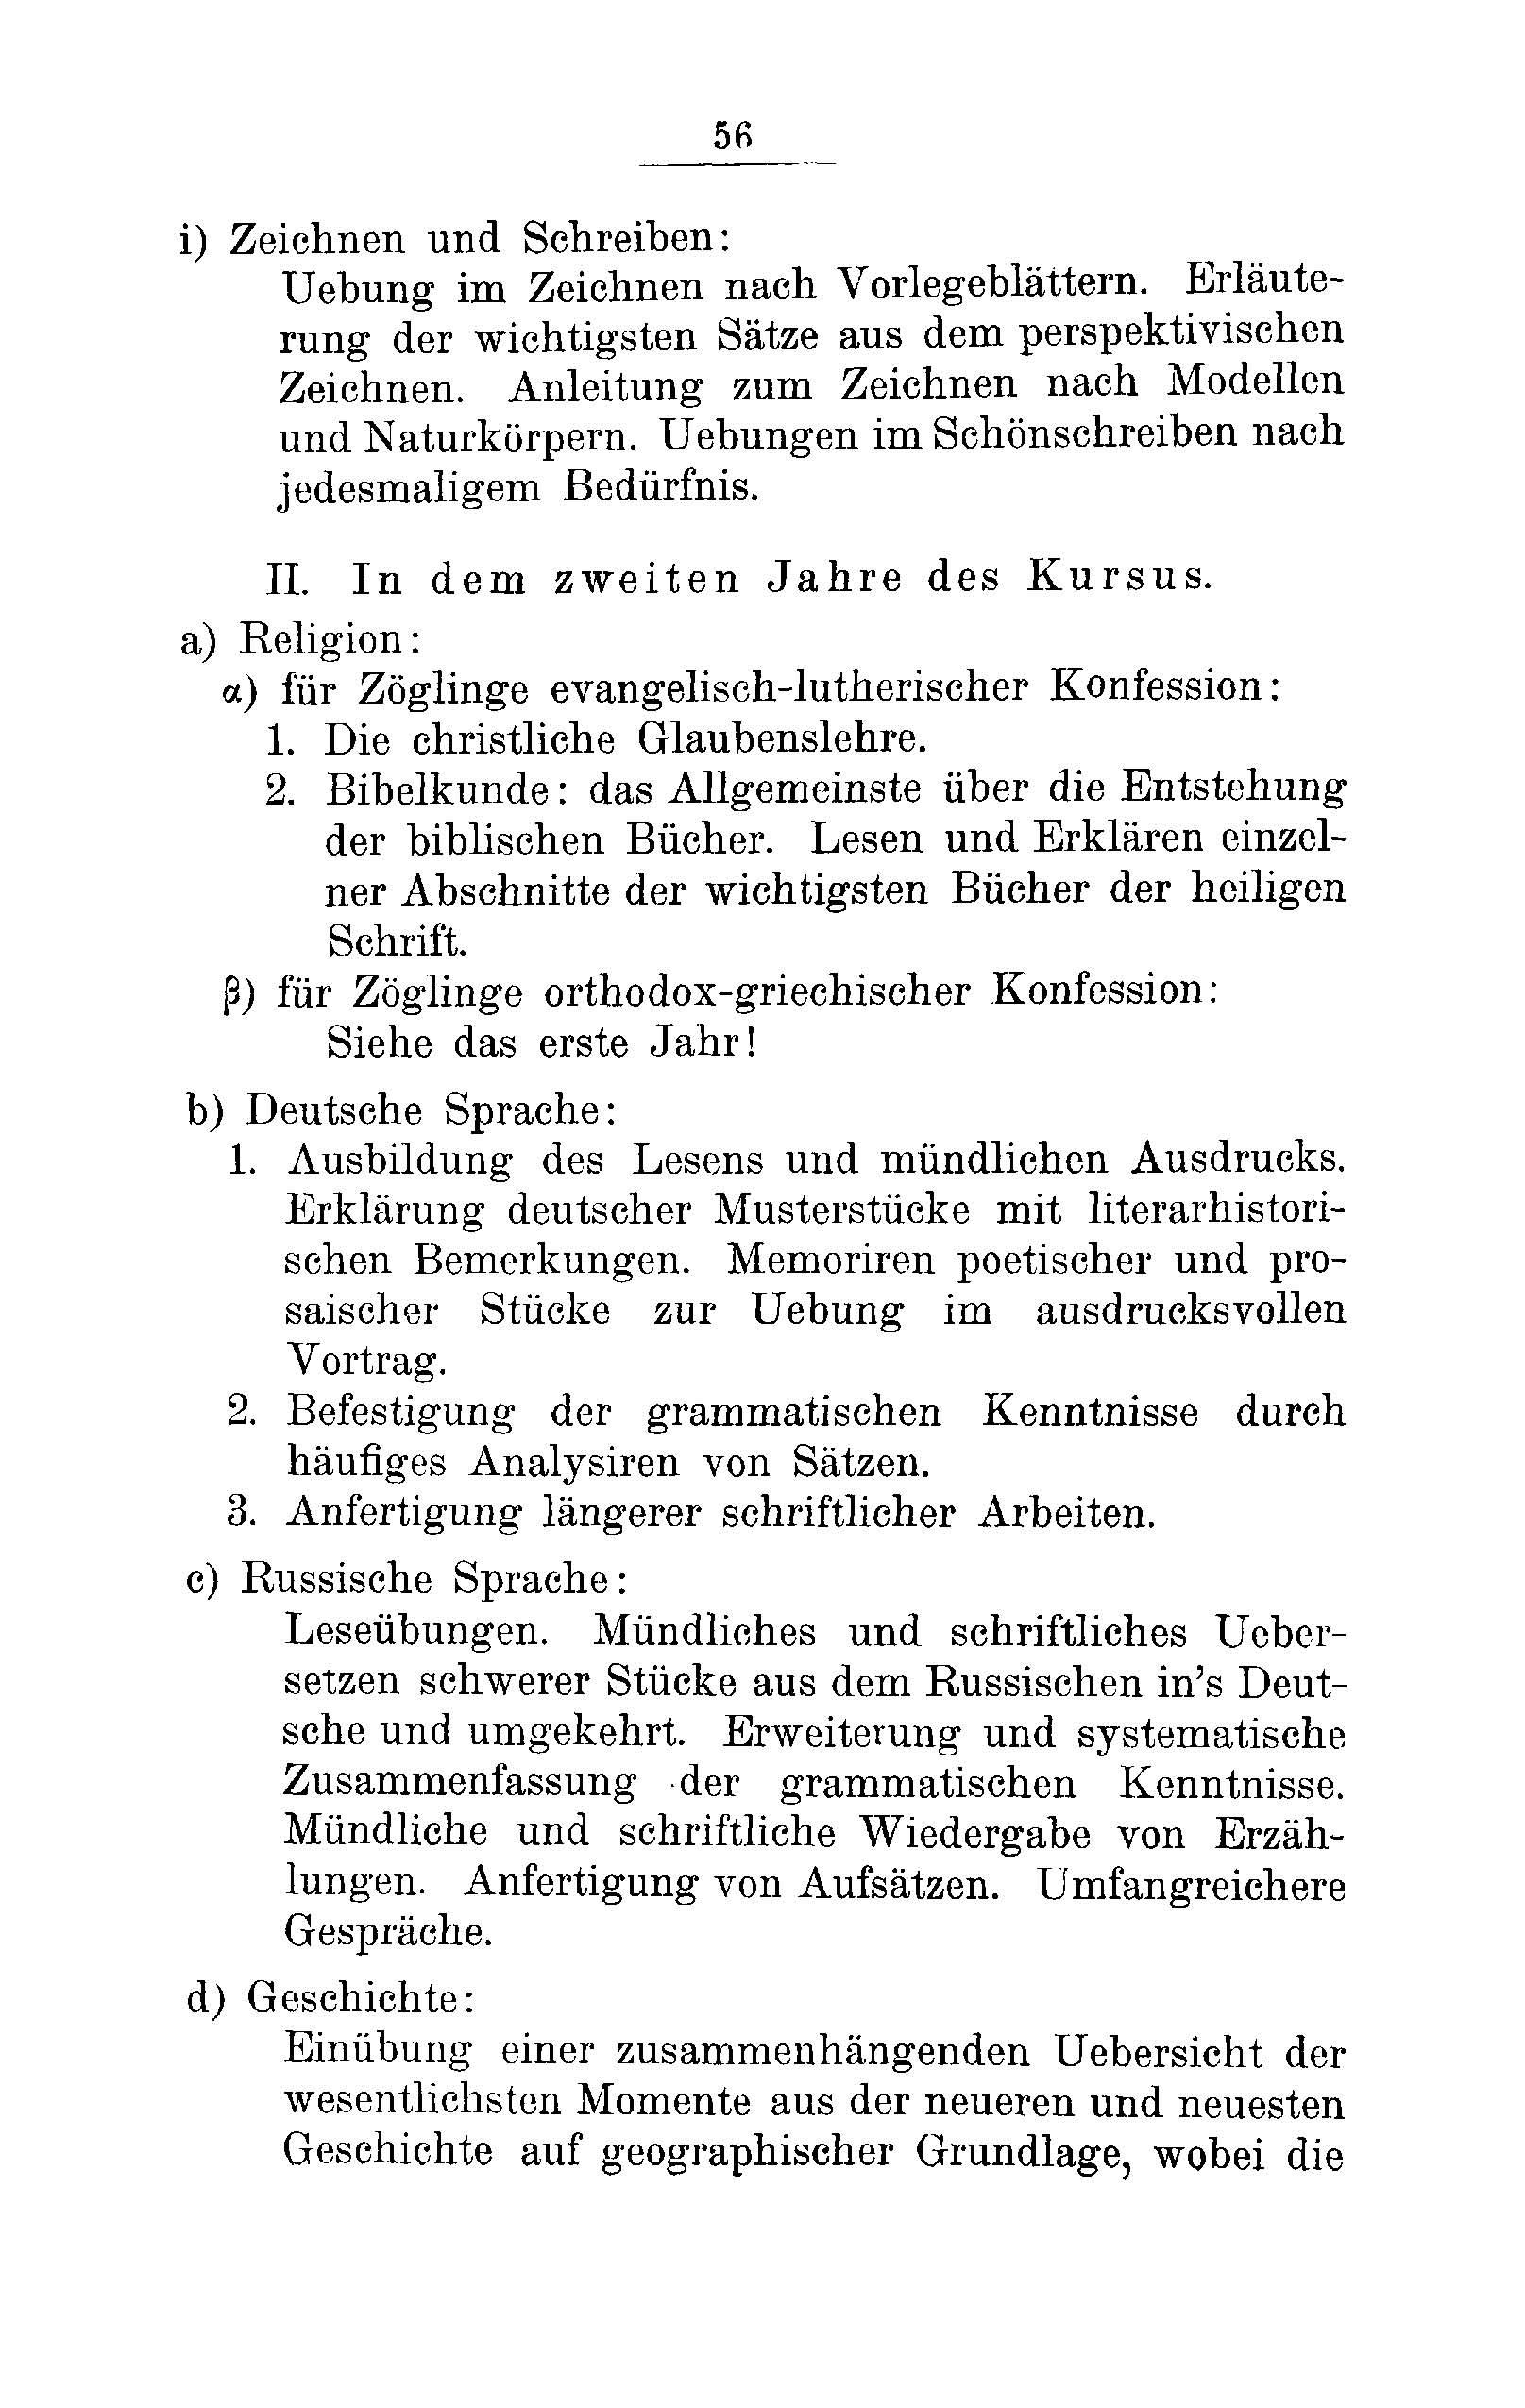 Das Erste Dorpatsche Lehrer-Seminar (1890) | 59. Основной текст